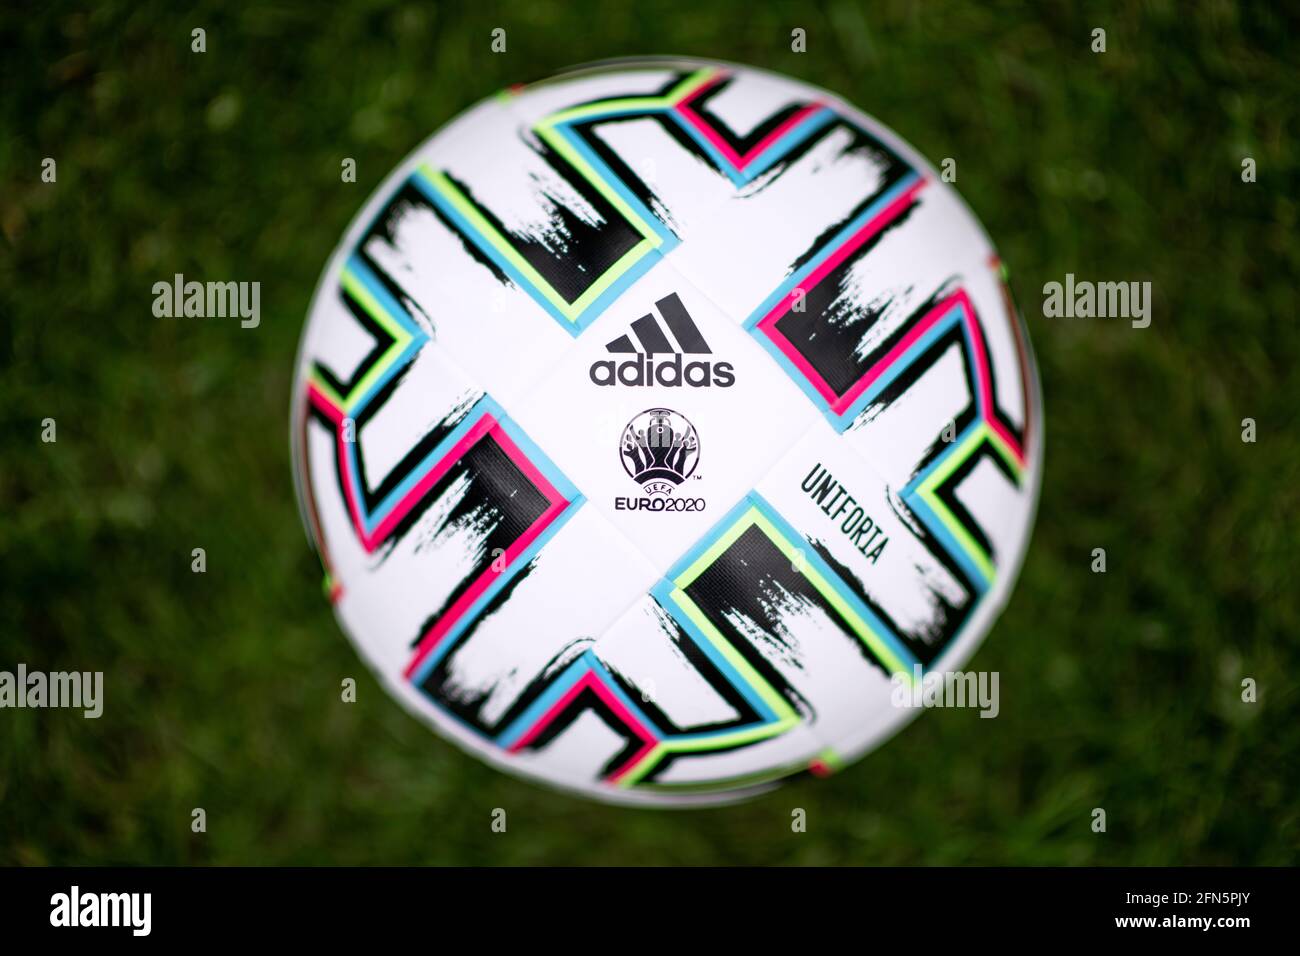 Primer plano de Adidas Uniforia, balón oficial de la UEFA European Championship 2020 Foto de stock